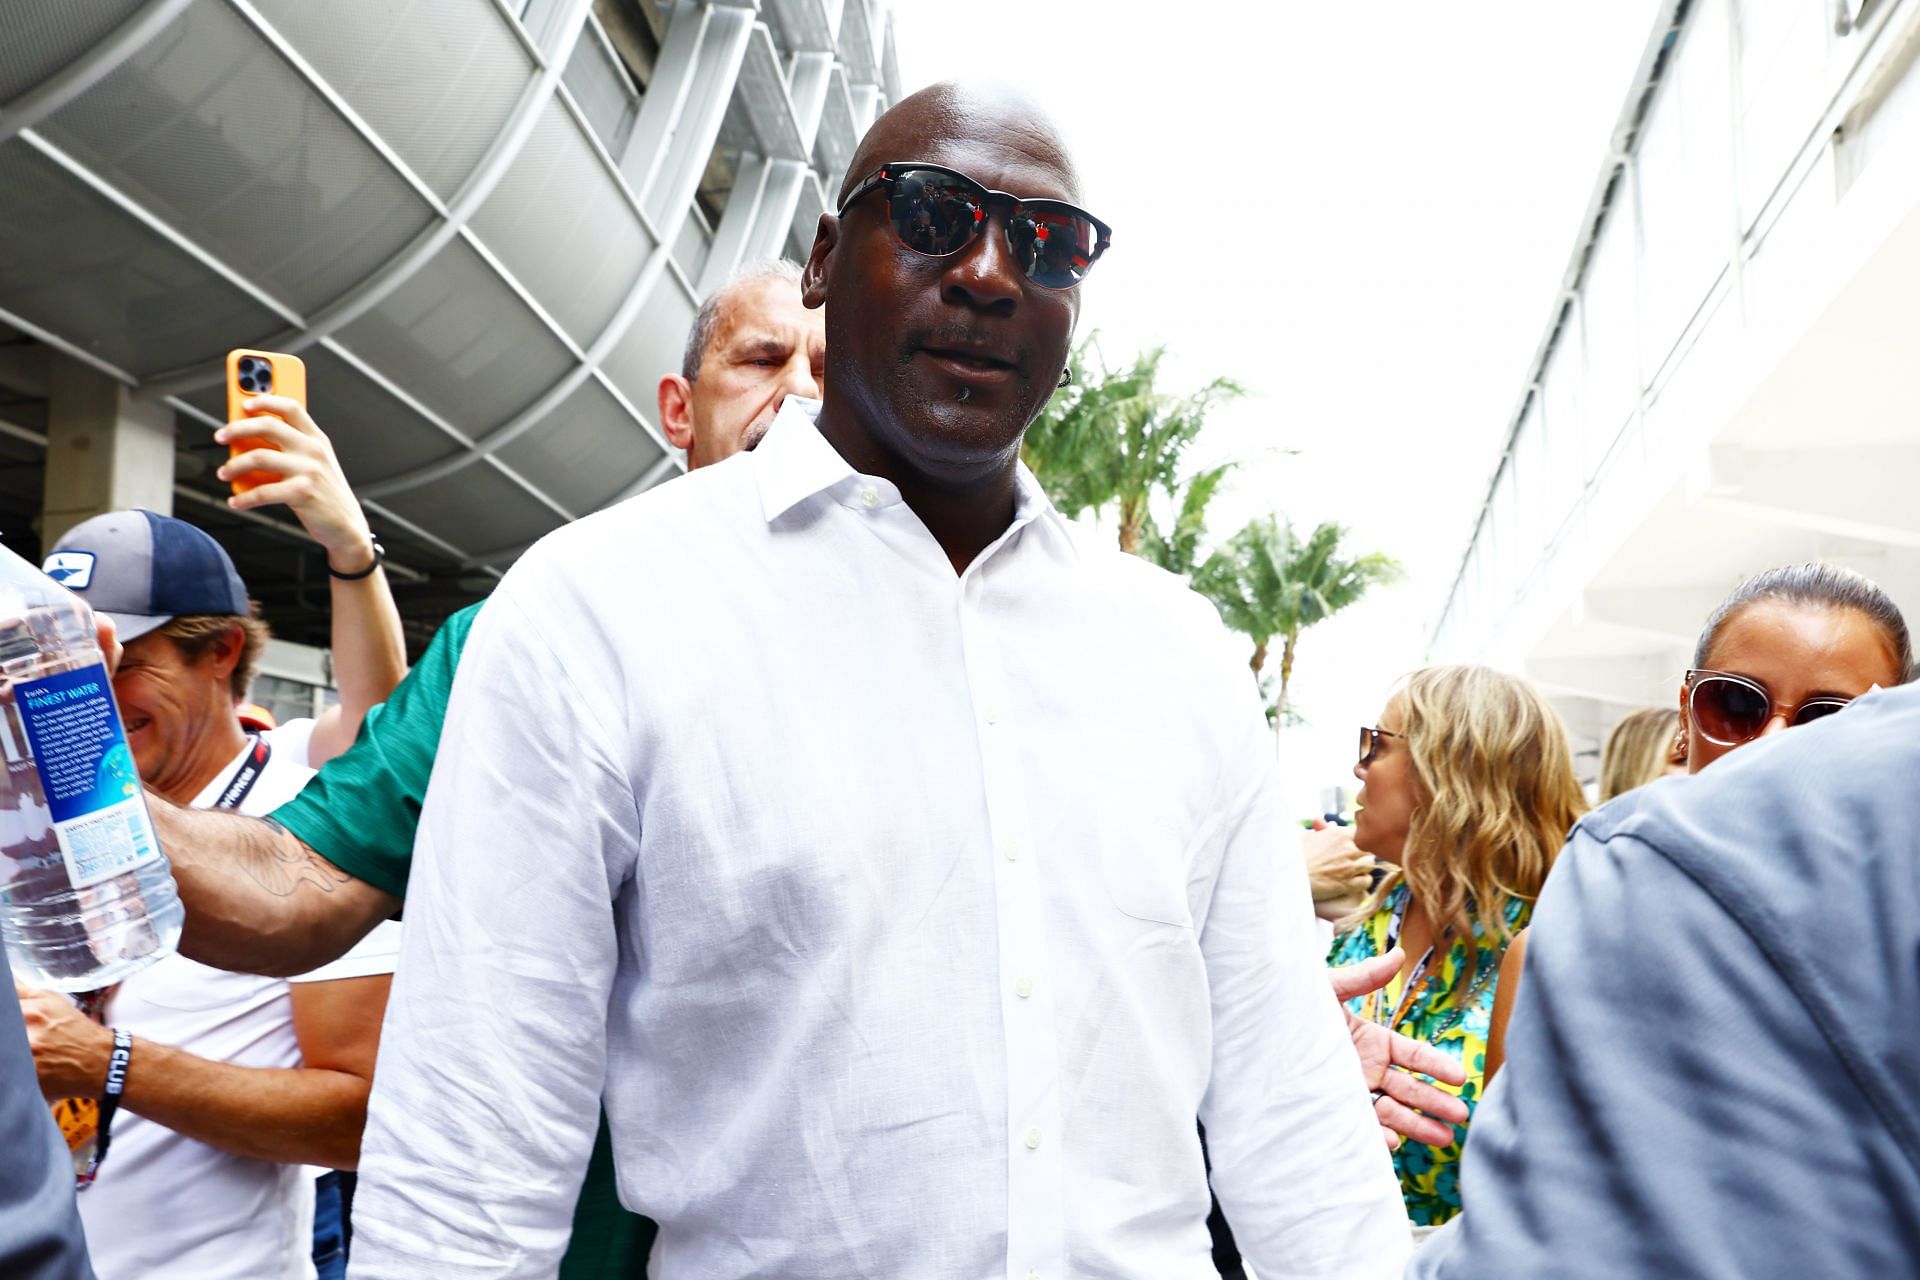 WATCH: DJ Khaled Joins LeBron James' “Pack,” Days After Embracing Michael  Jordan at Miami F1 GP - EssentiallySports